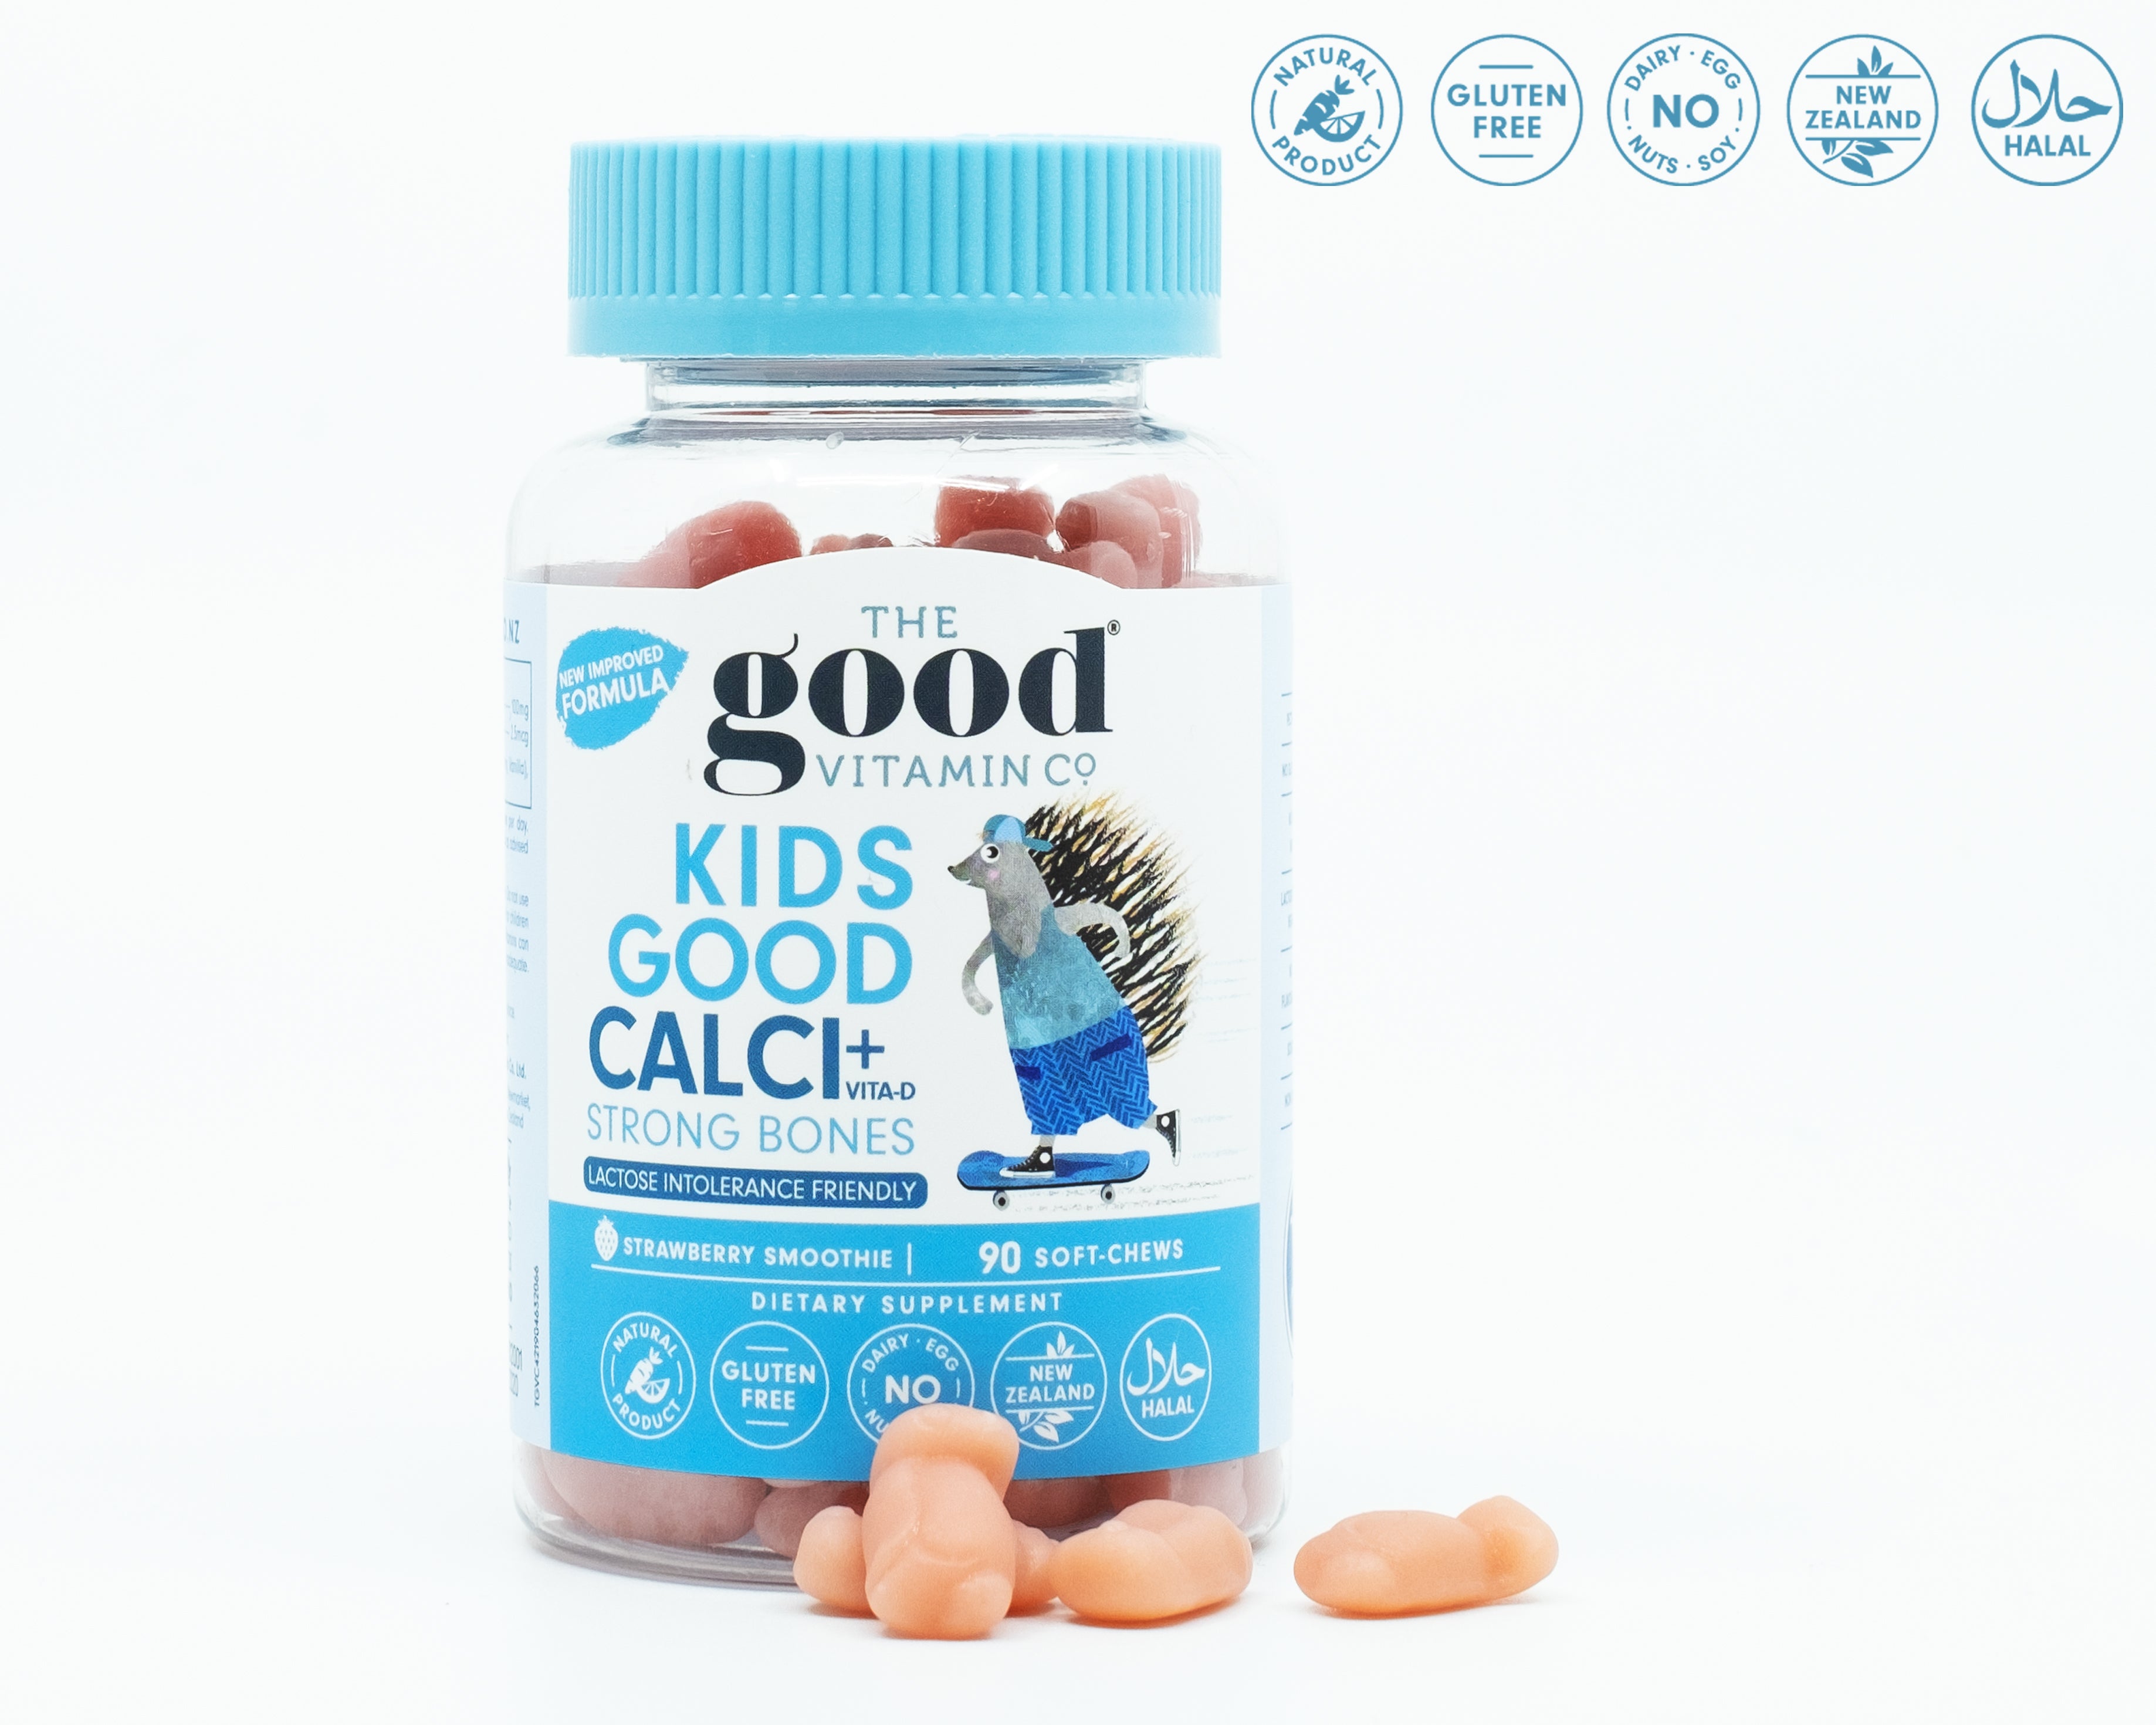 TheGoodVitaminCo Kids Good Calci+ & Vita-D 90 Soft-Chews - 365 Health Limited